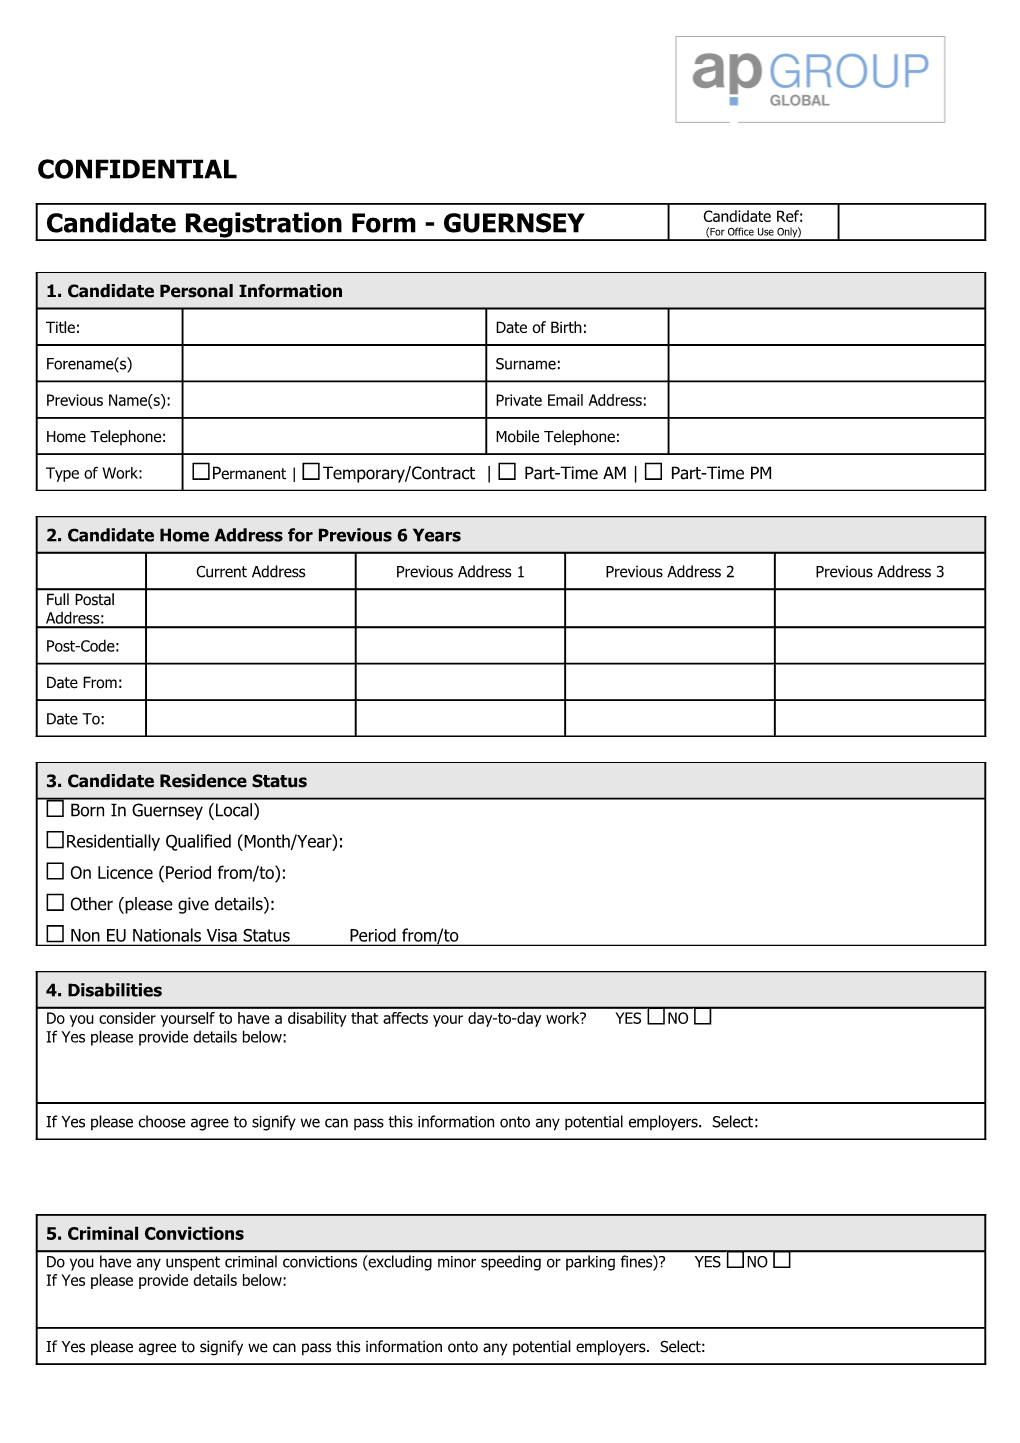 Candidate Registration Form - GUERNSEY